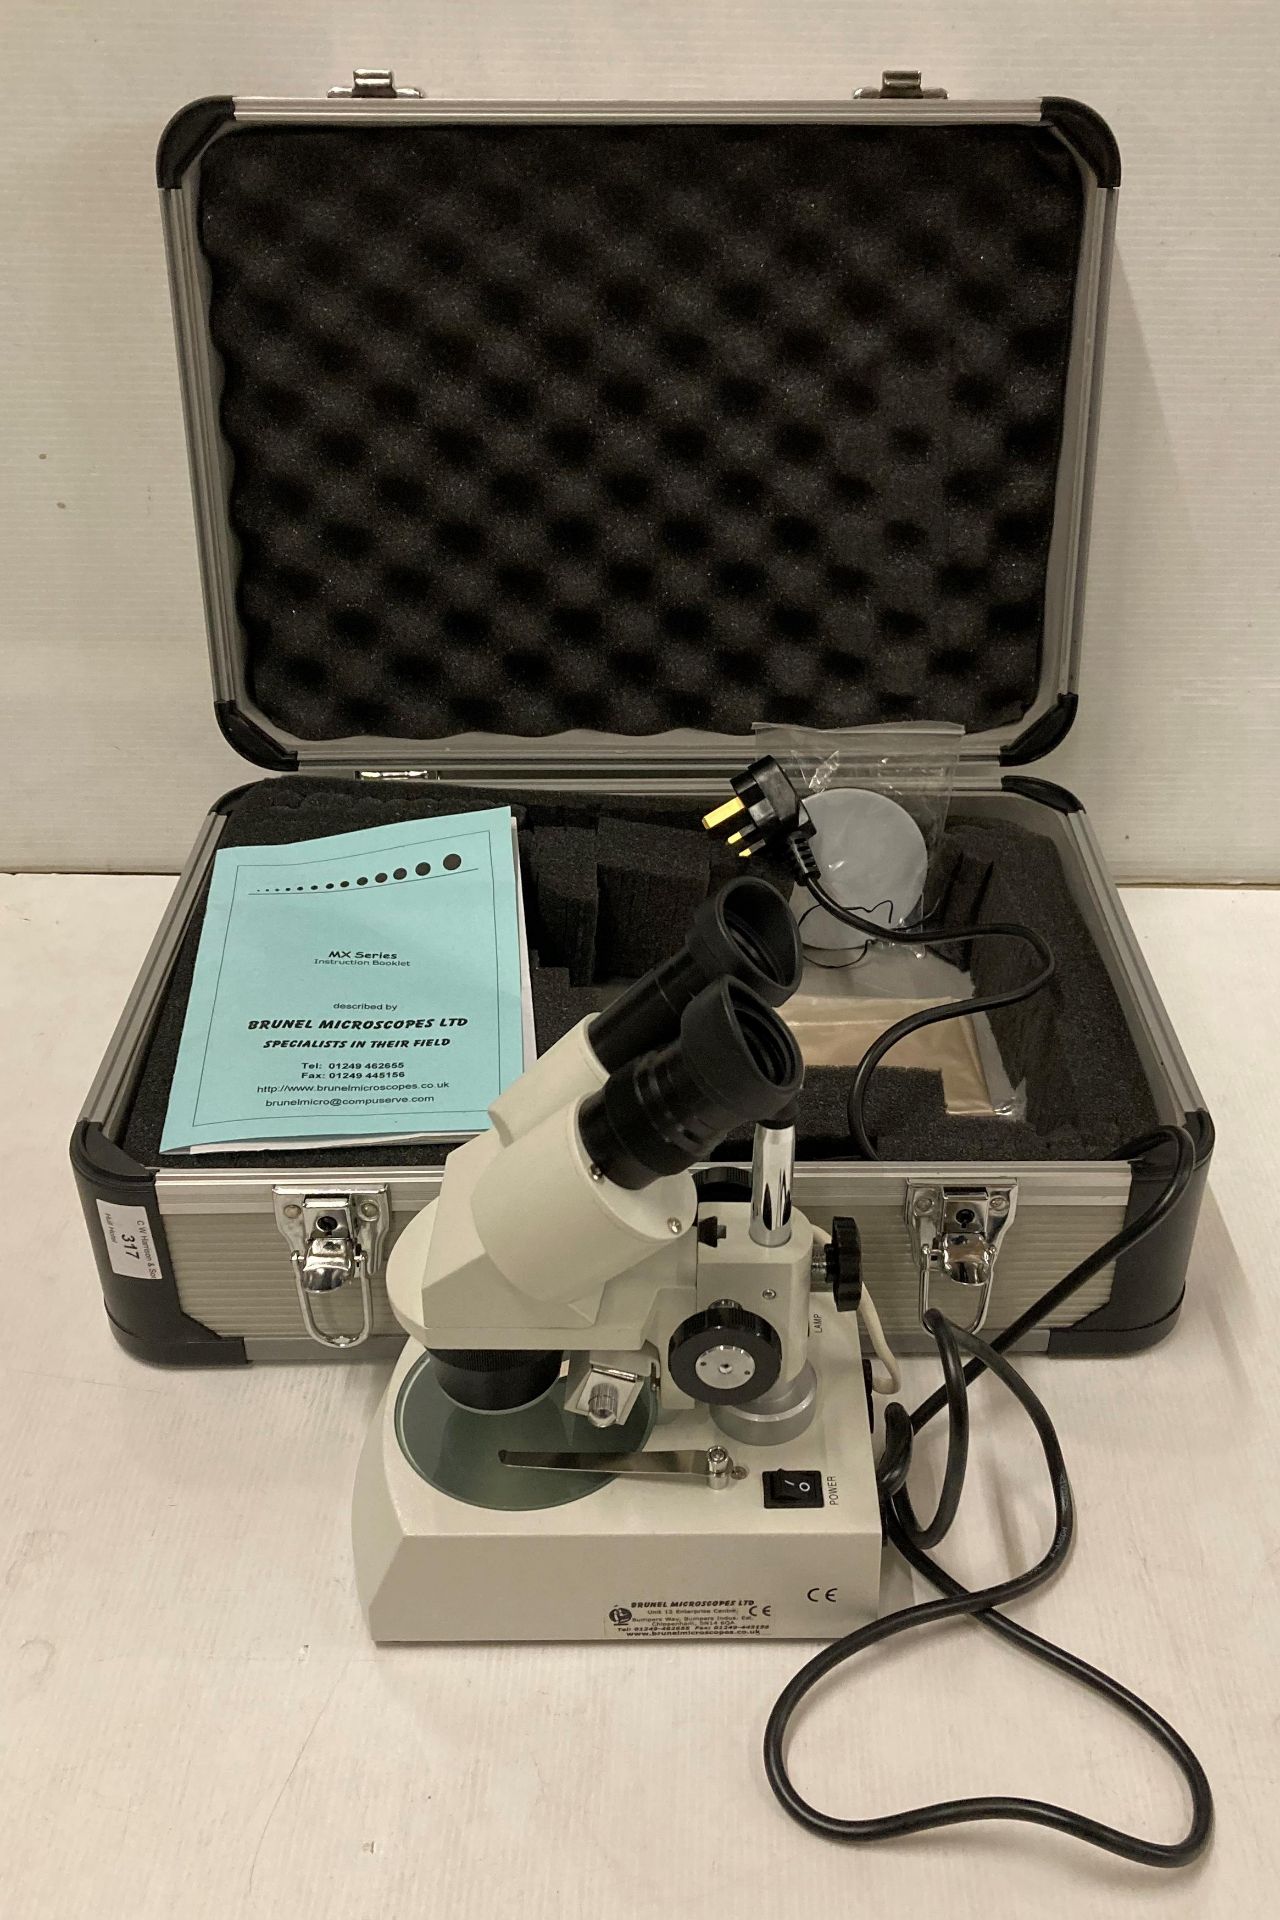 Brunel microscope electric MX Series in aluminium carry case (240v) (saleroom location: T08-1)